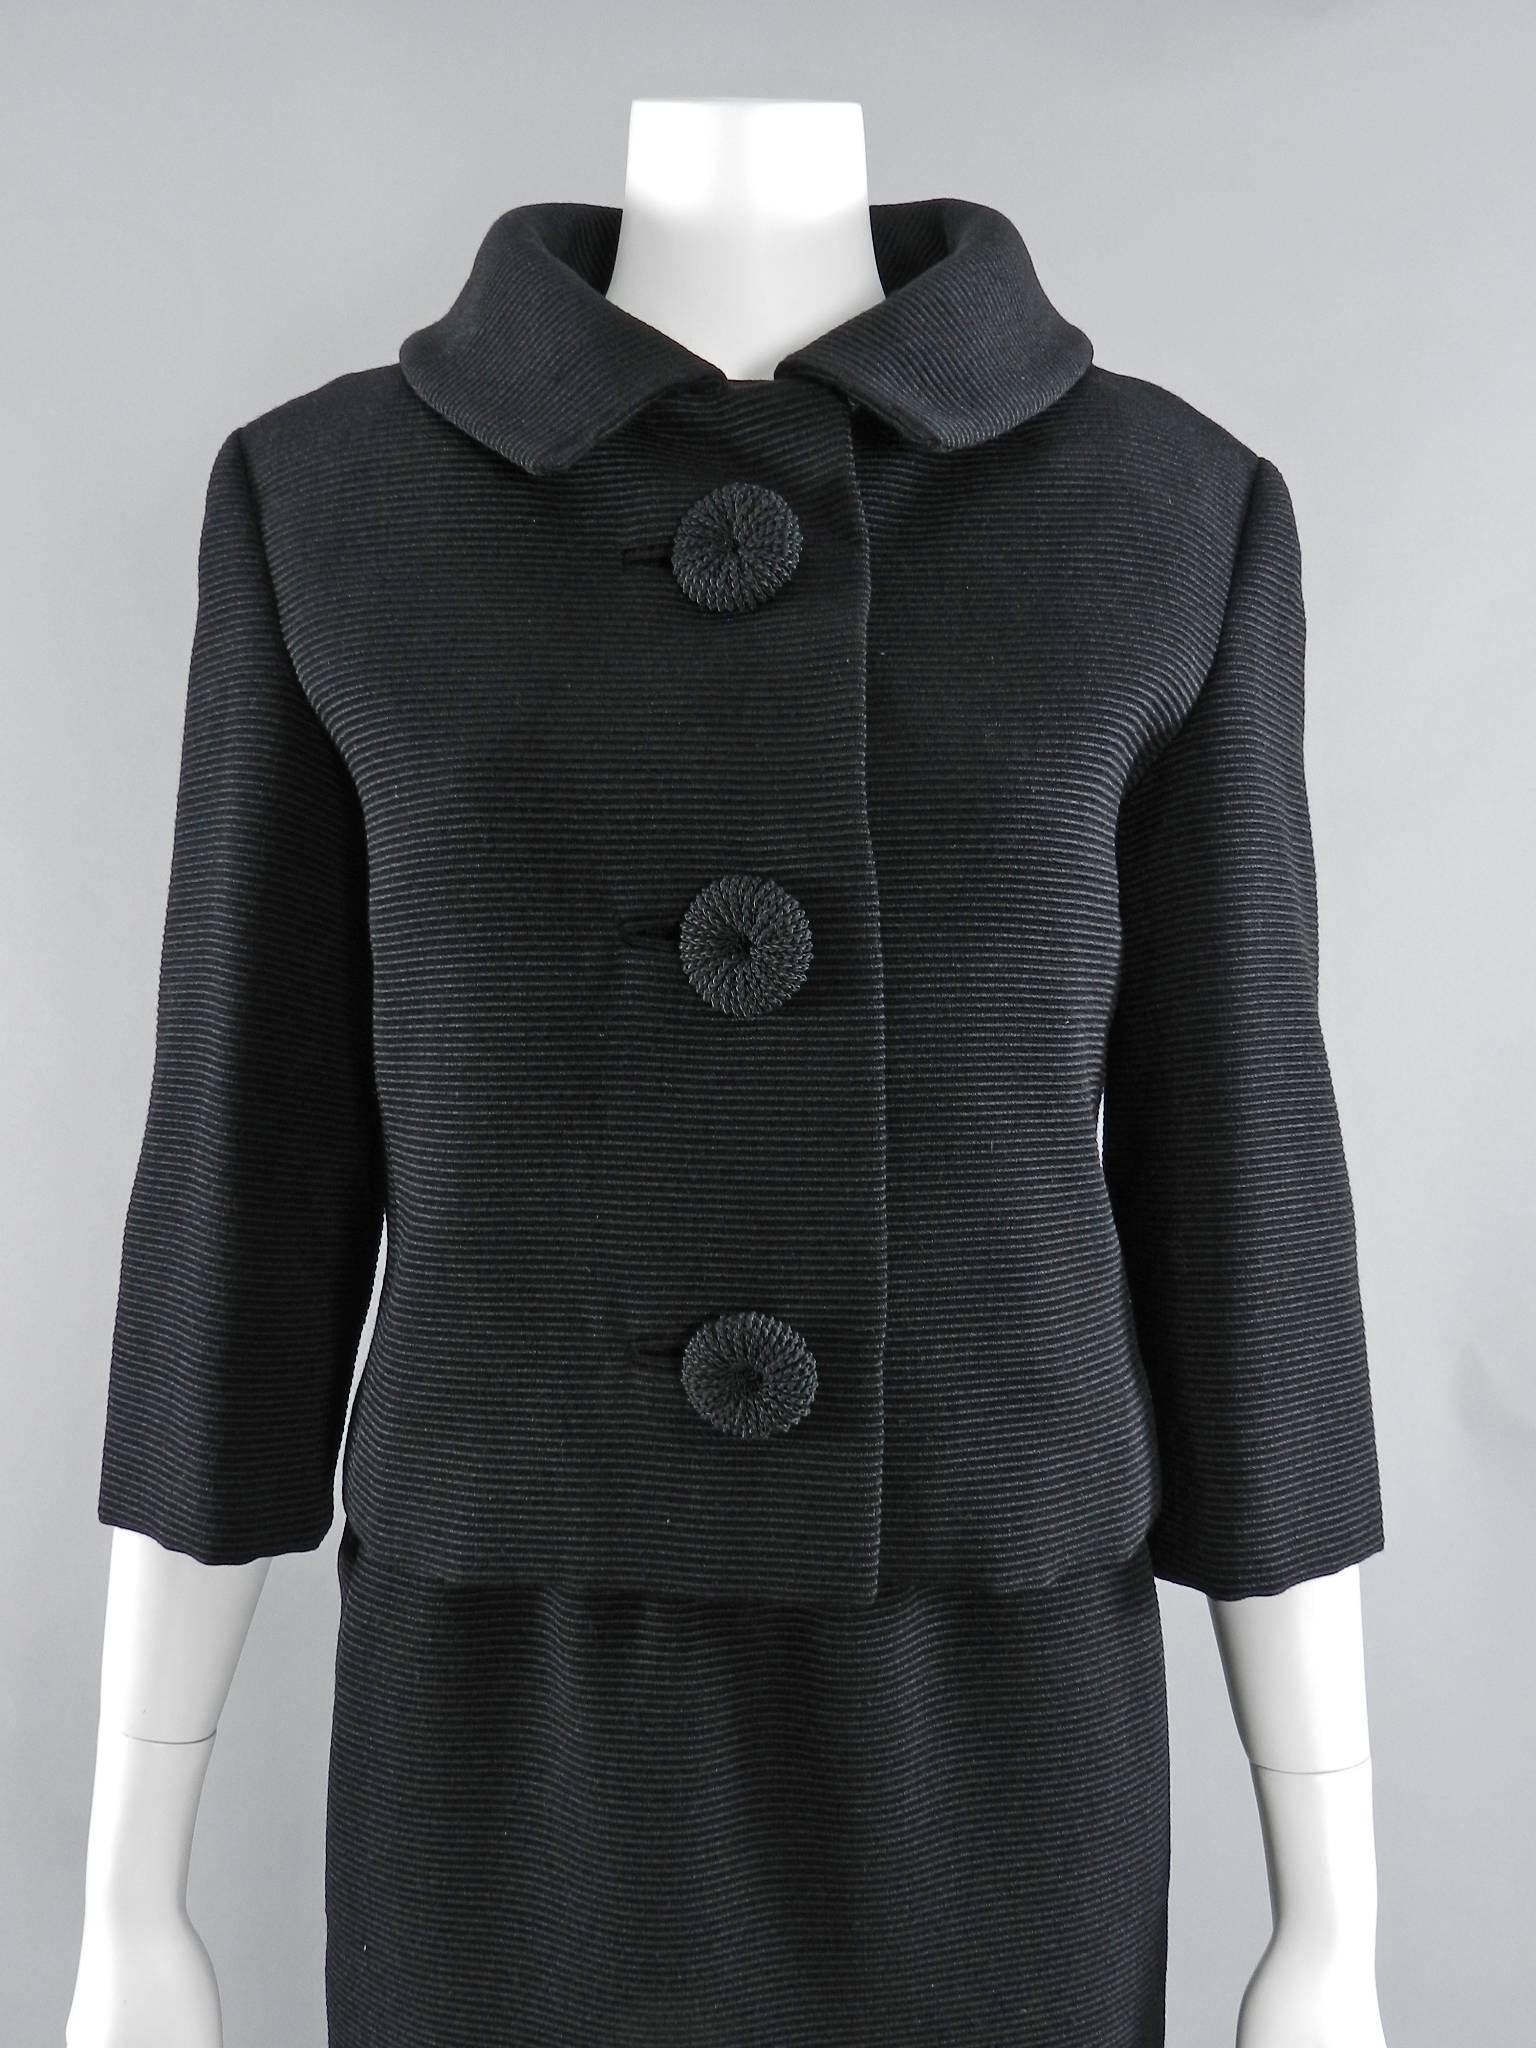 Christian Dior circa 1960 Black Dress and Jacket Suit 1